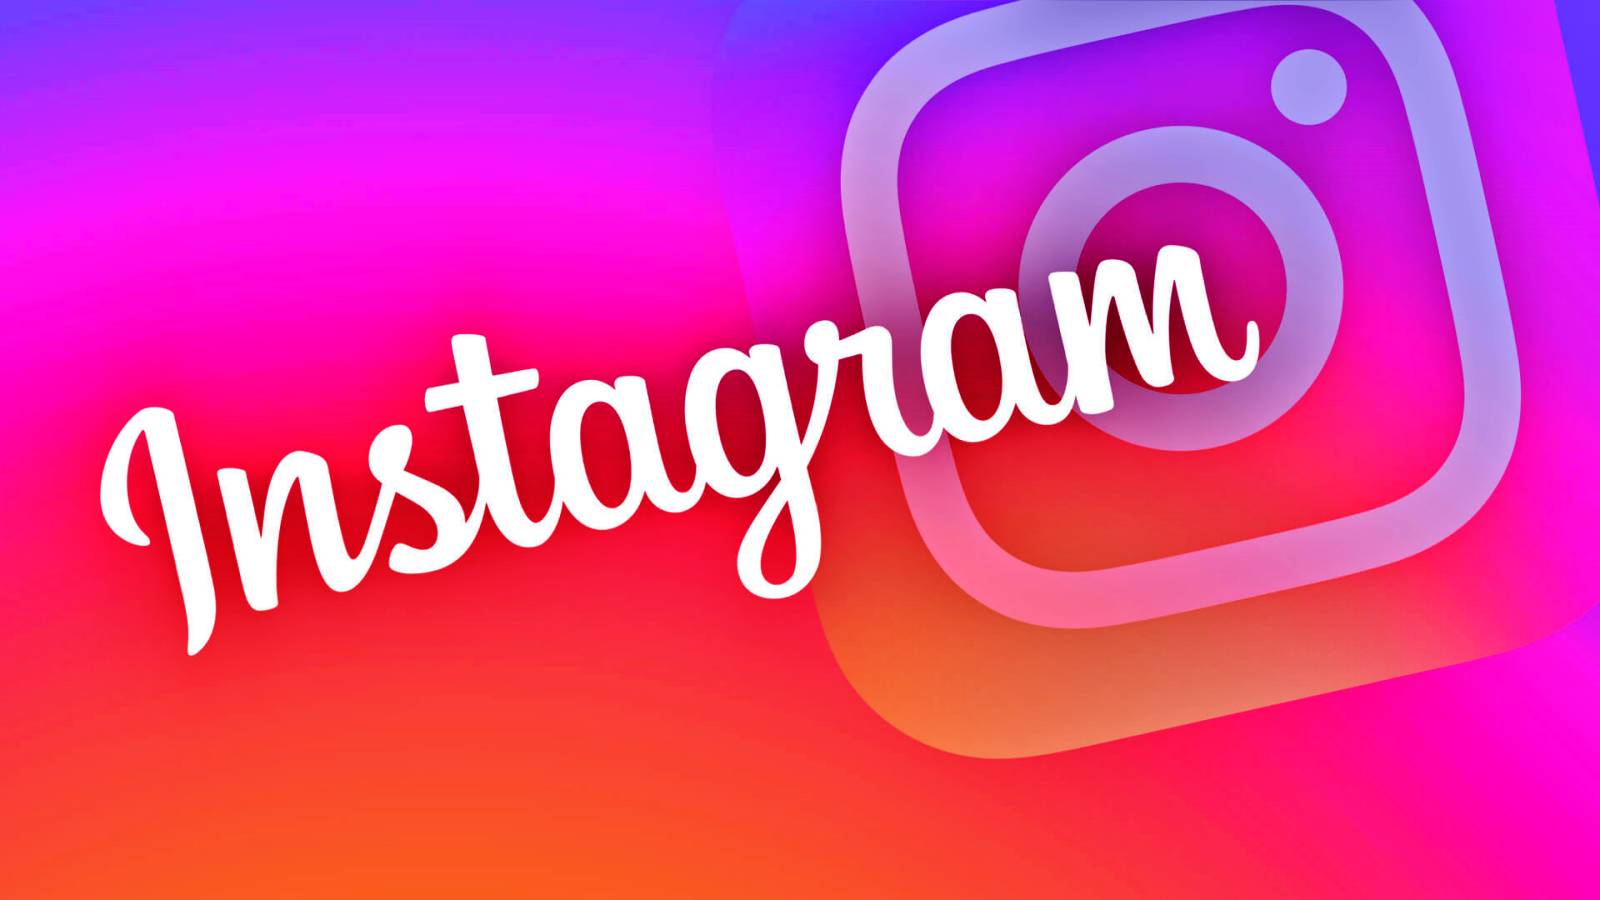 Instagram Update Noutati Aplicatia Telefoane